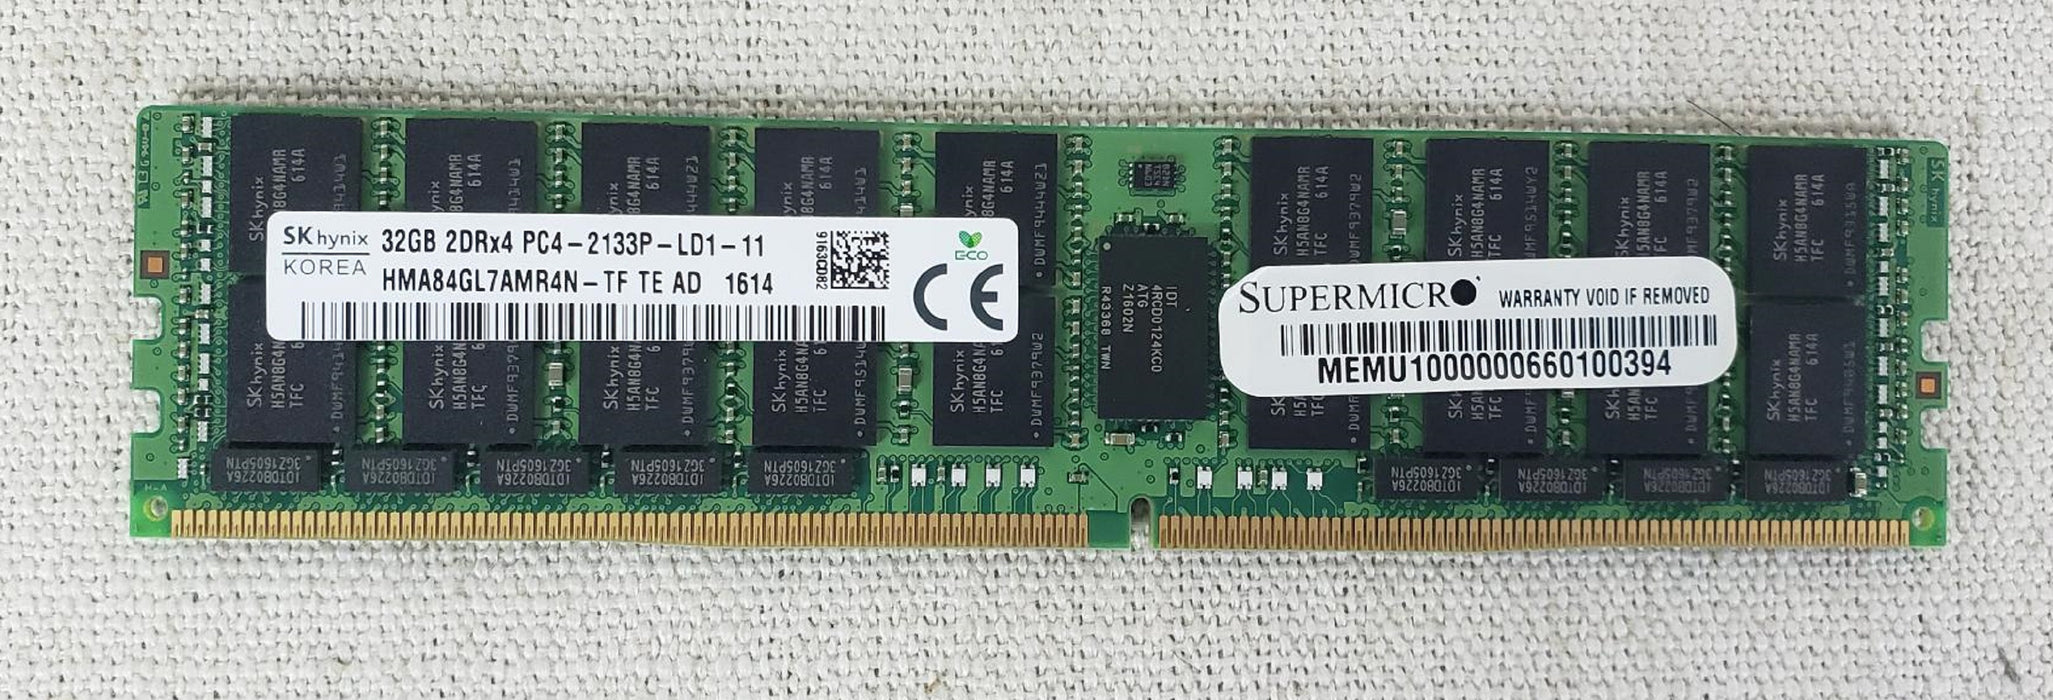 Hynix HMA84GL7AMR4N-TF 32GB 2DRx4 PC4-2133P DDR4 Load-Reduced Server Memory